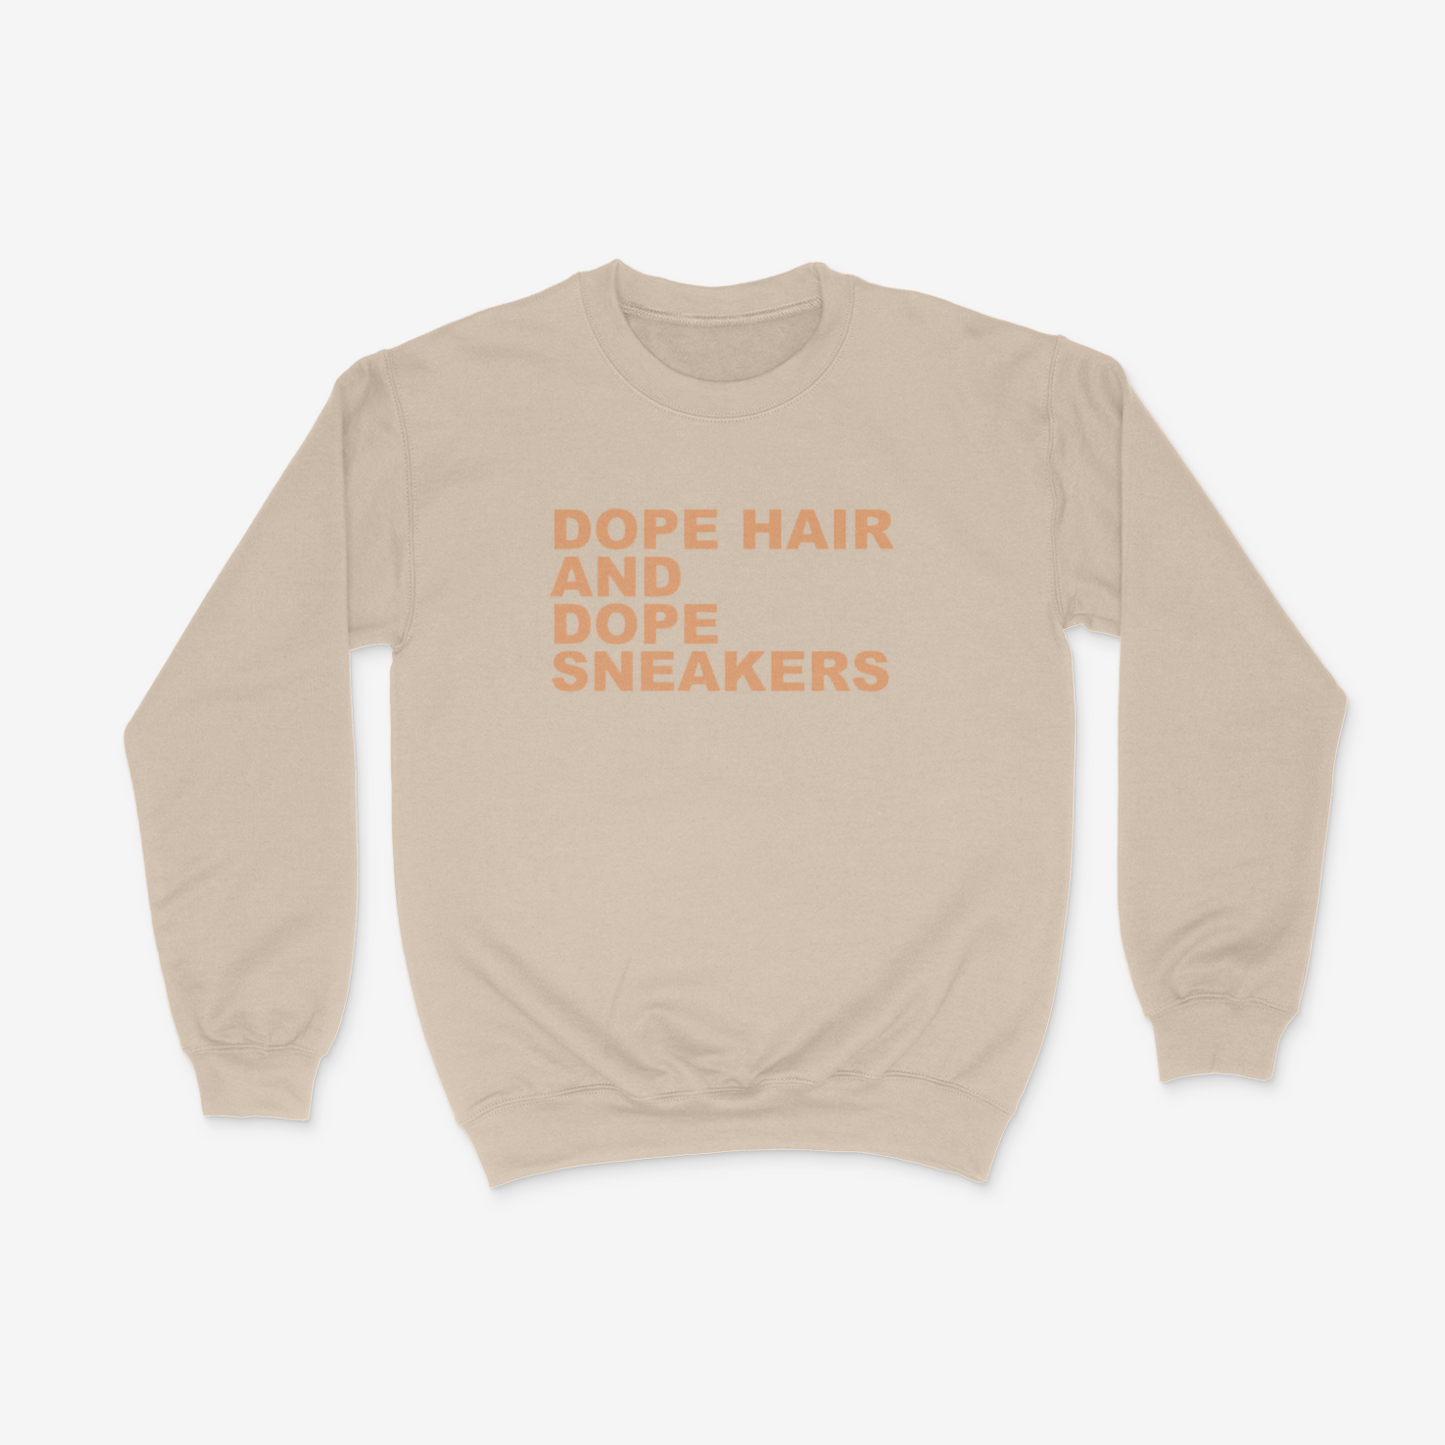 Dope Hair and Dope Sneakers Crewneck( Tan)